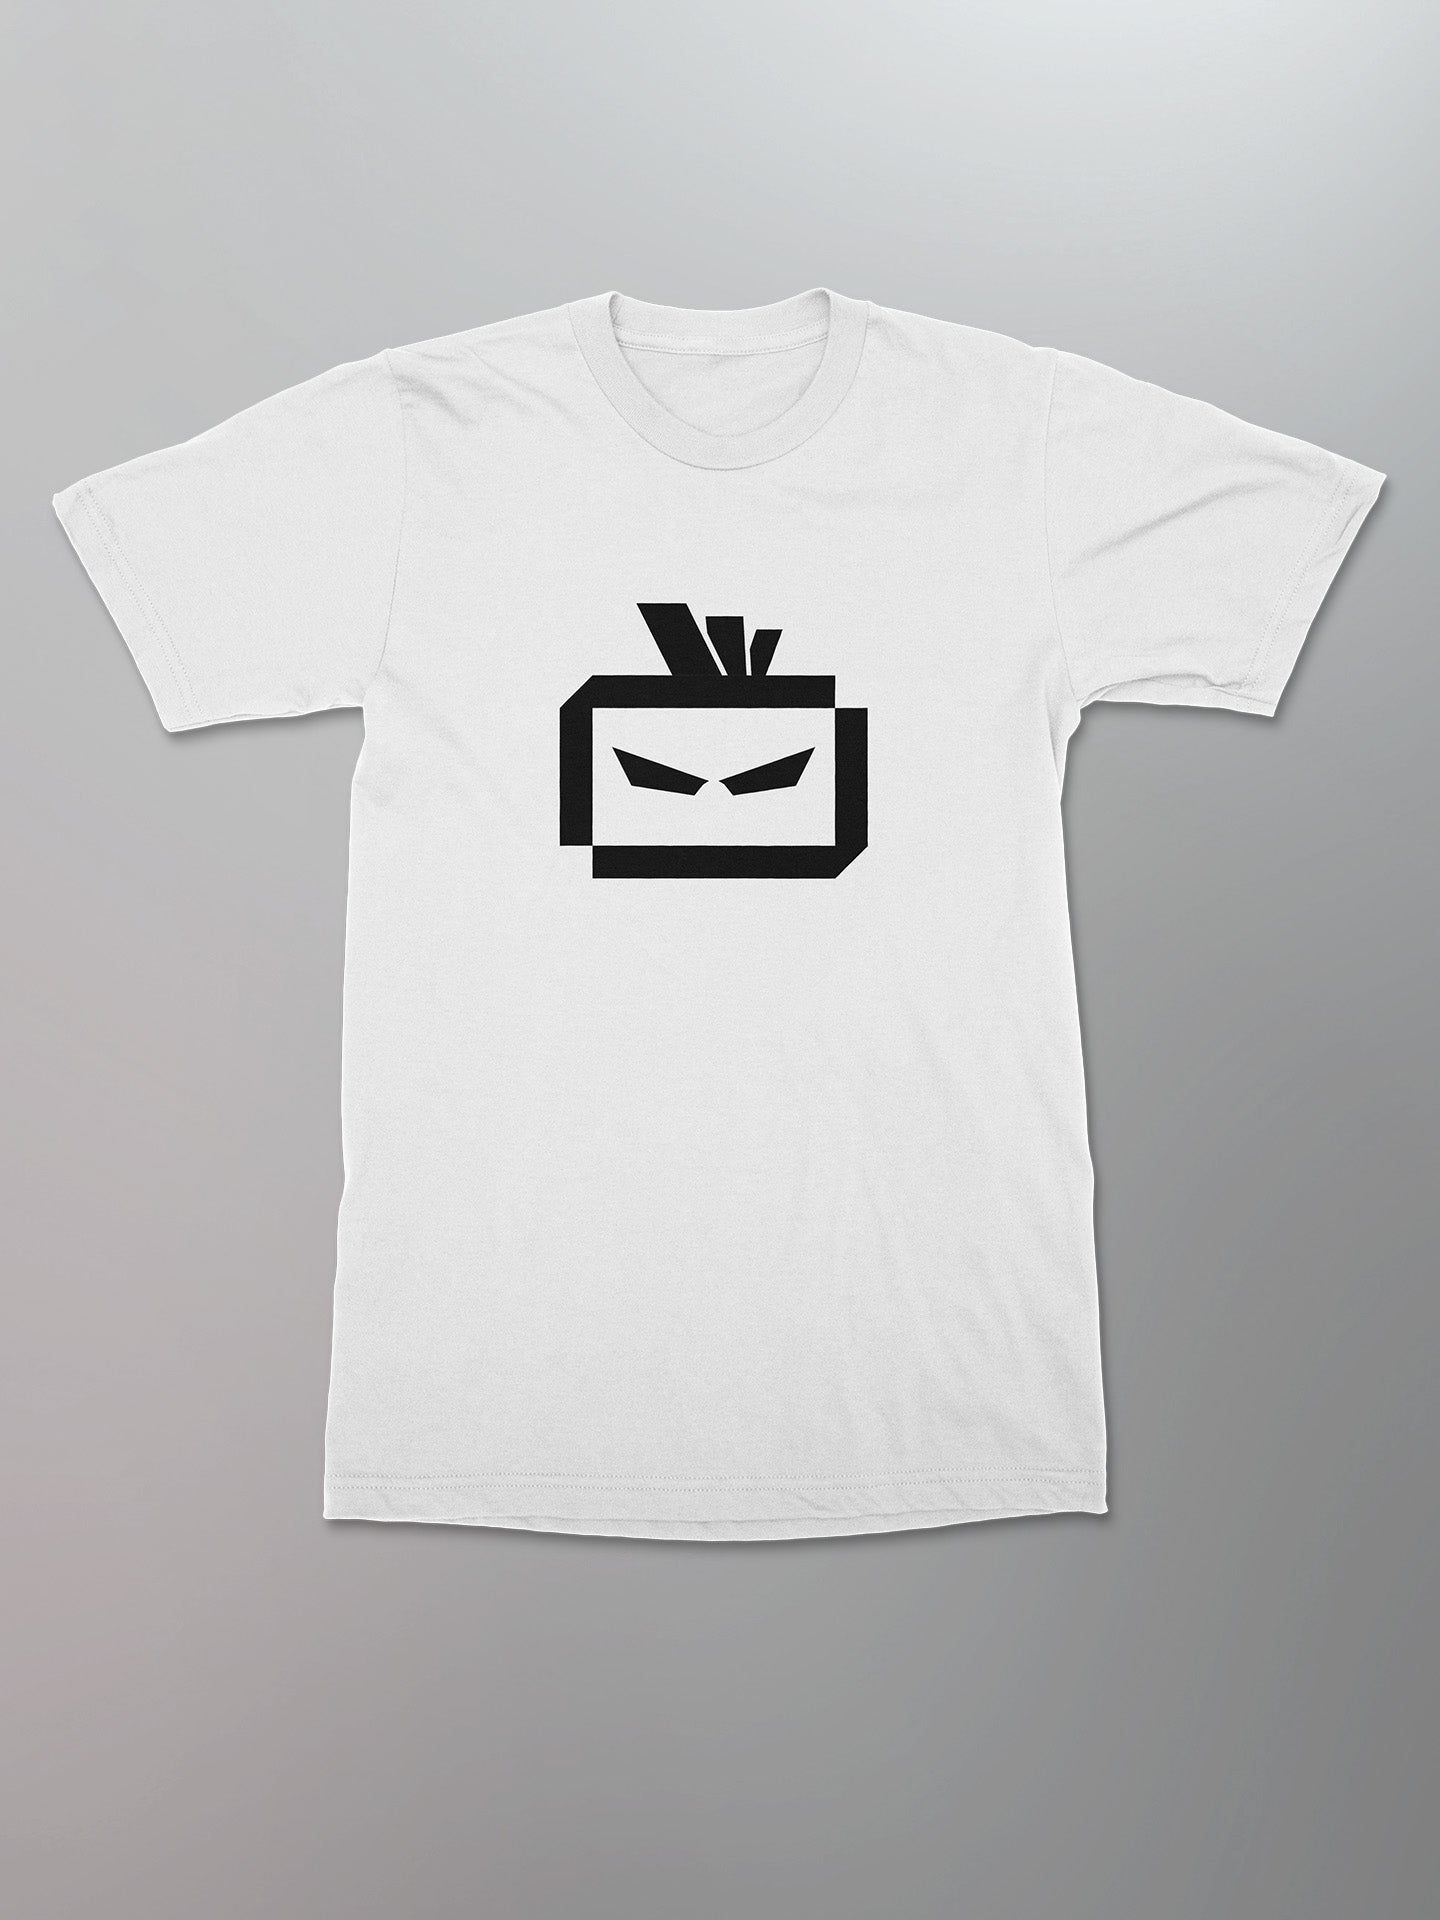 FiXT - Bot Shirt [White]